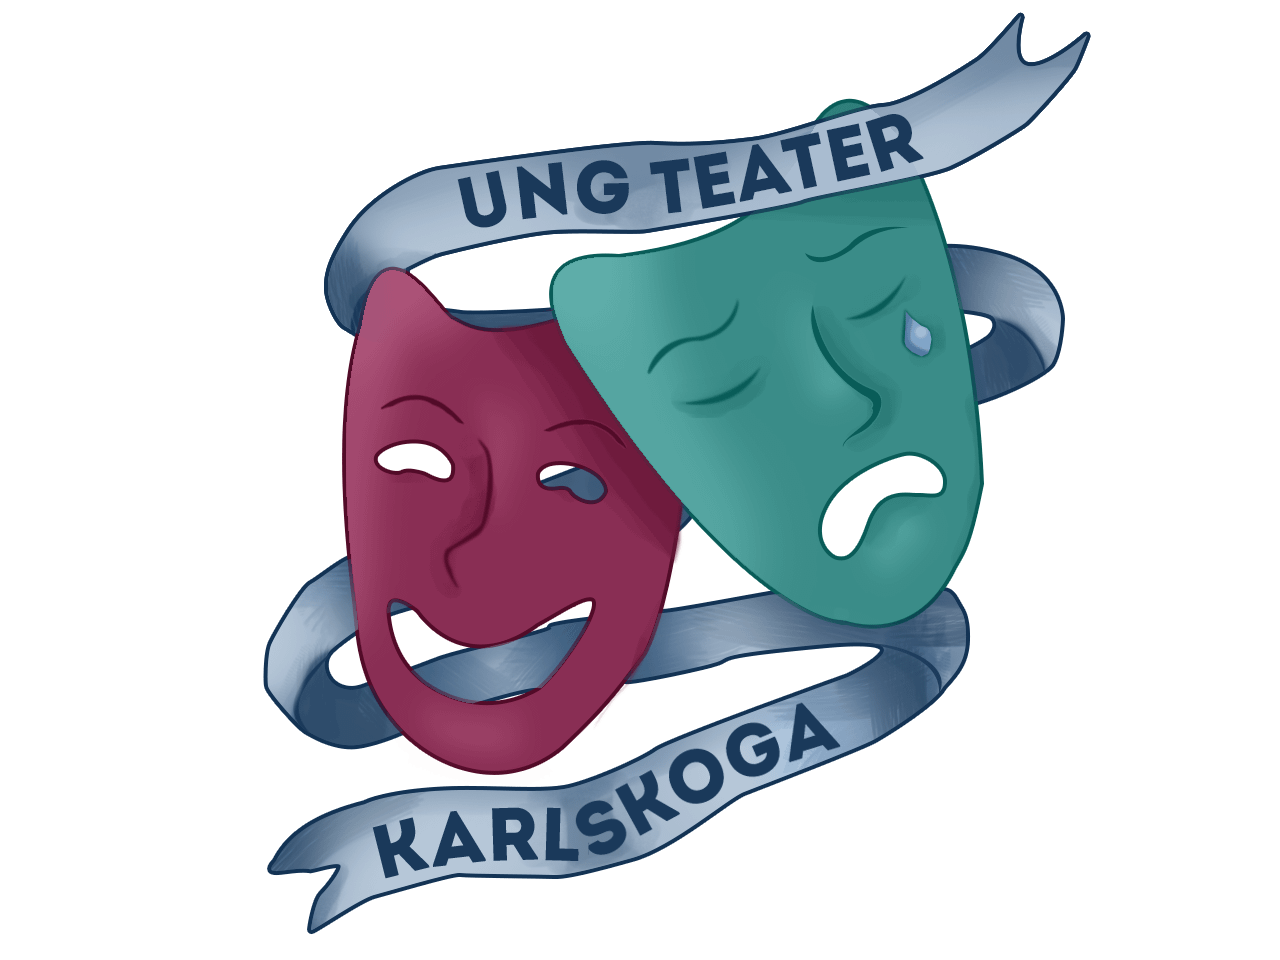 Ung Teater Karlskoga